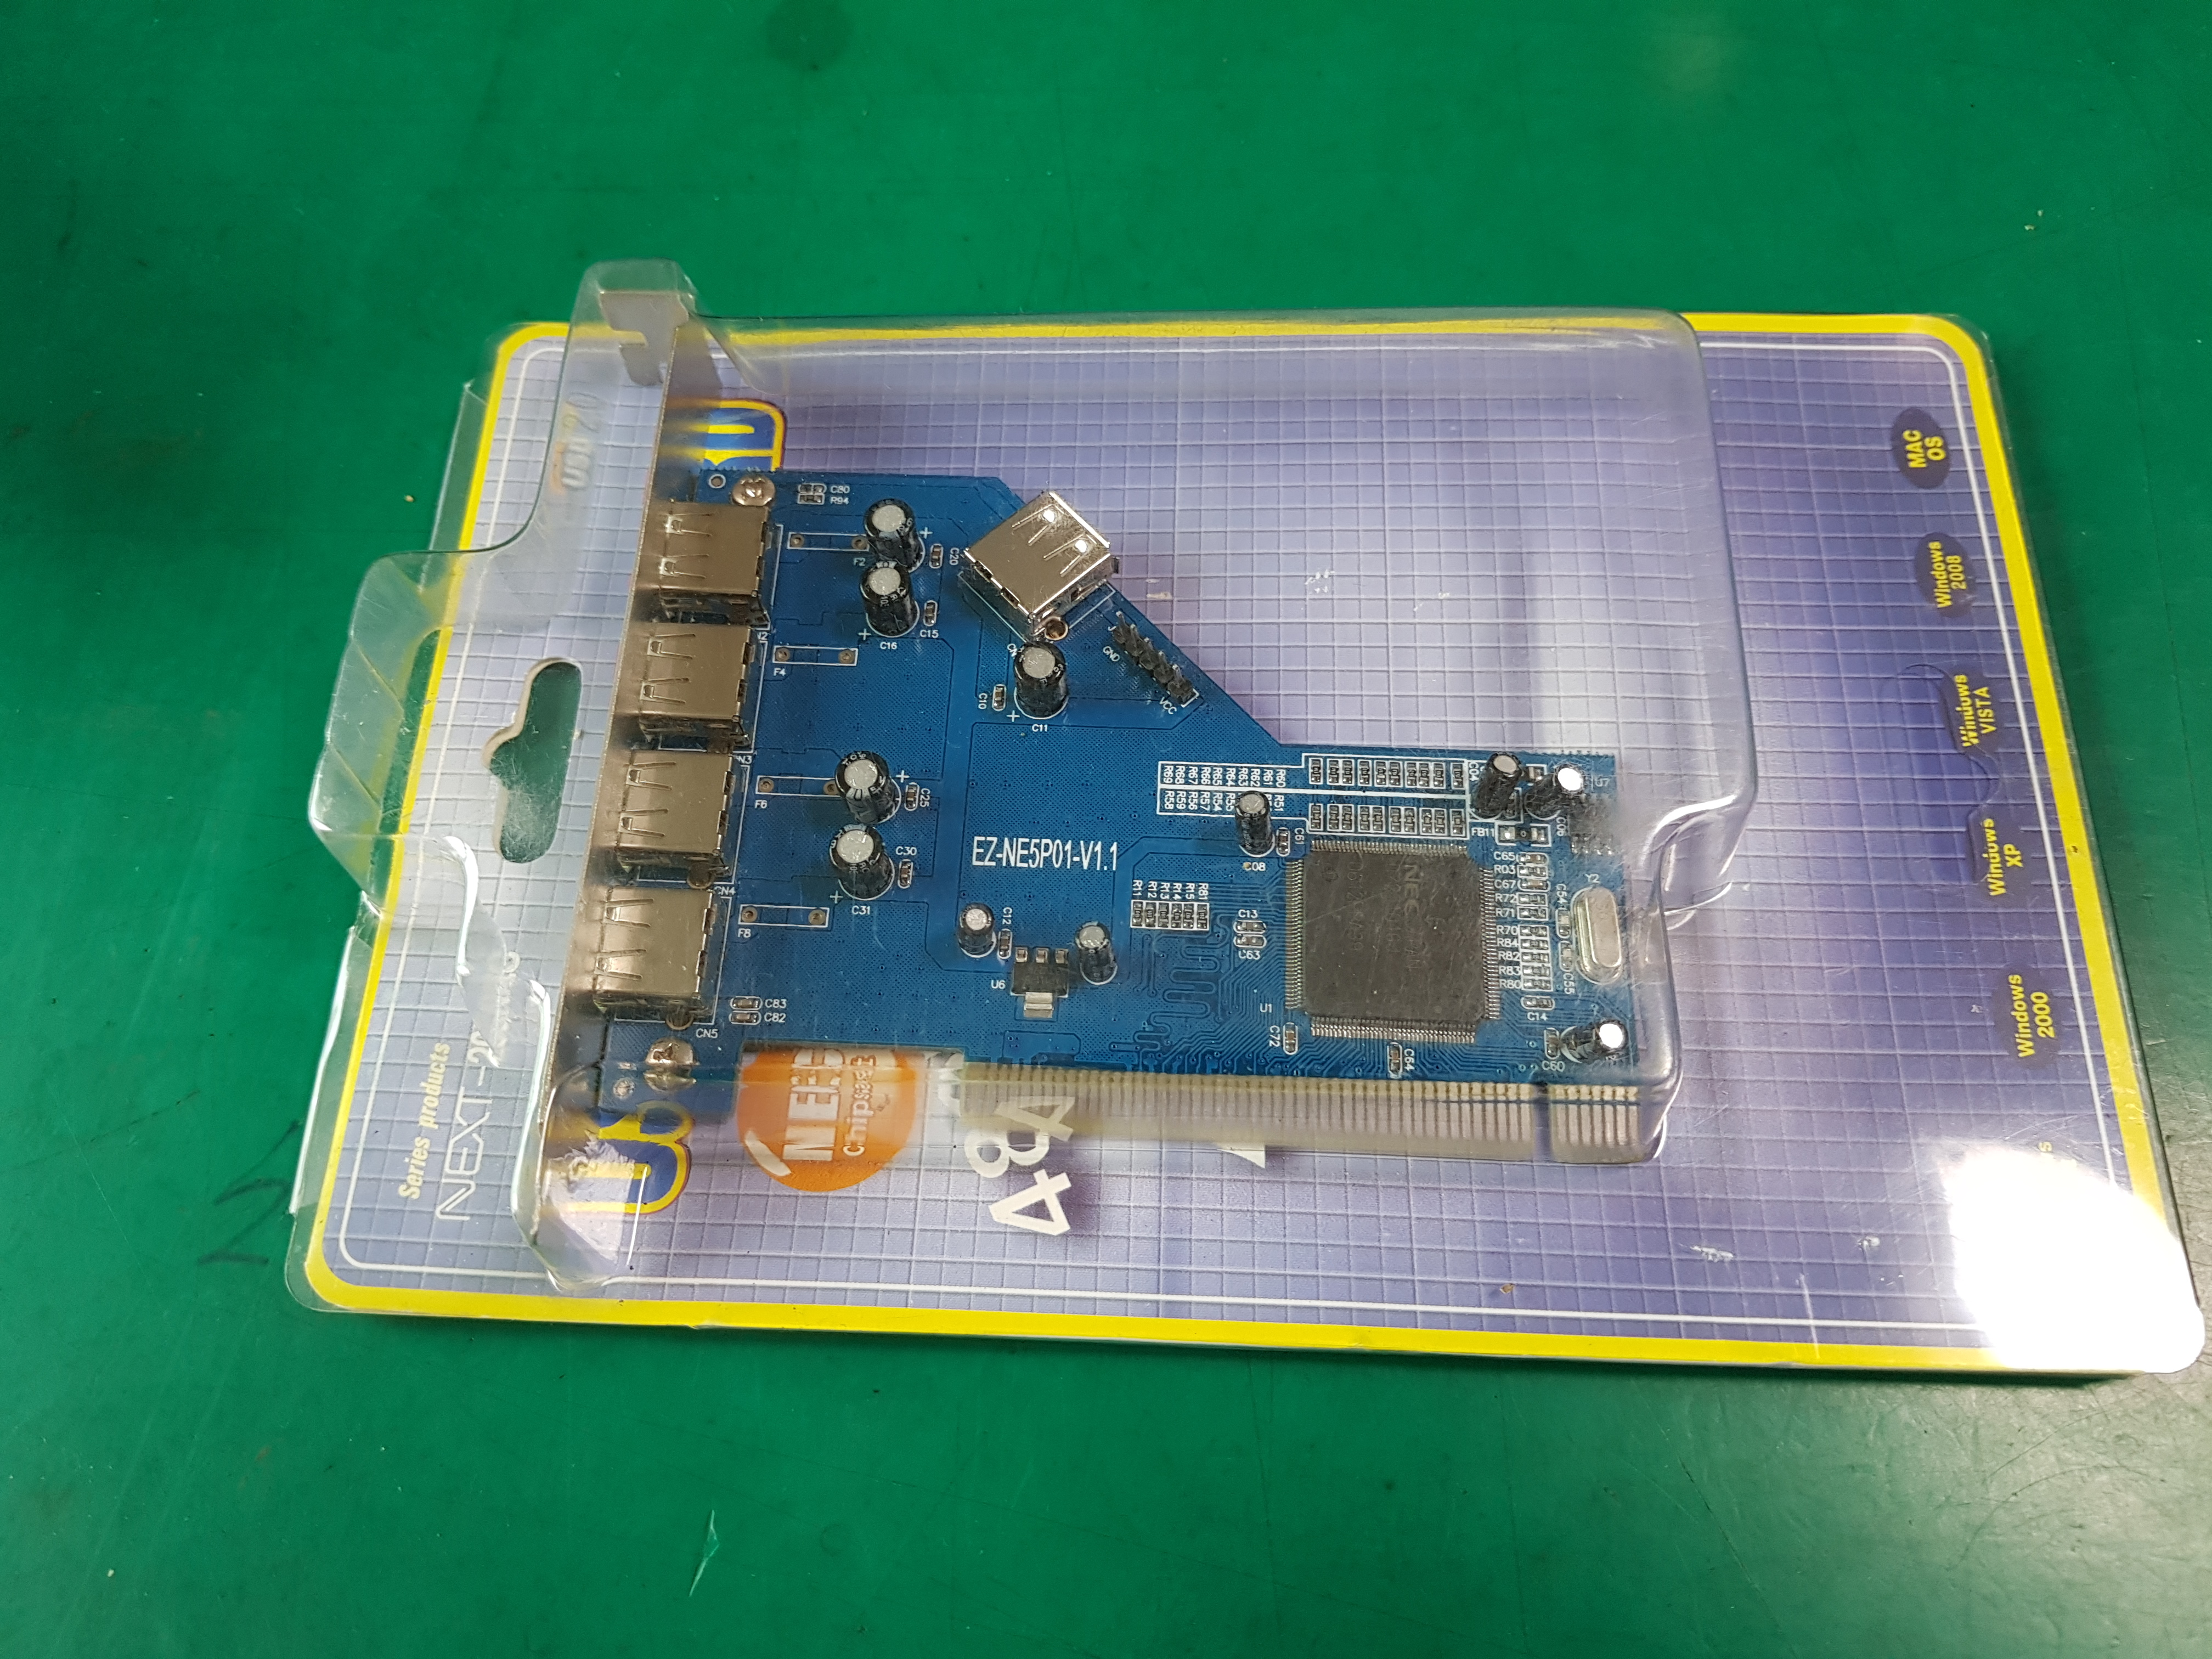 USB2.0 PCI CARD NEXT-205NEC(EZ-NE5P01-V1.1-미사용품)